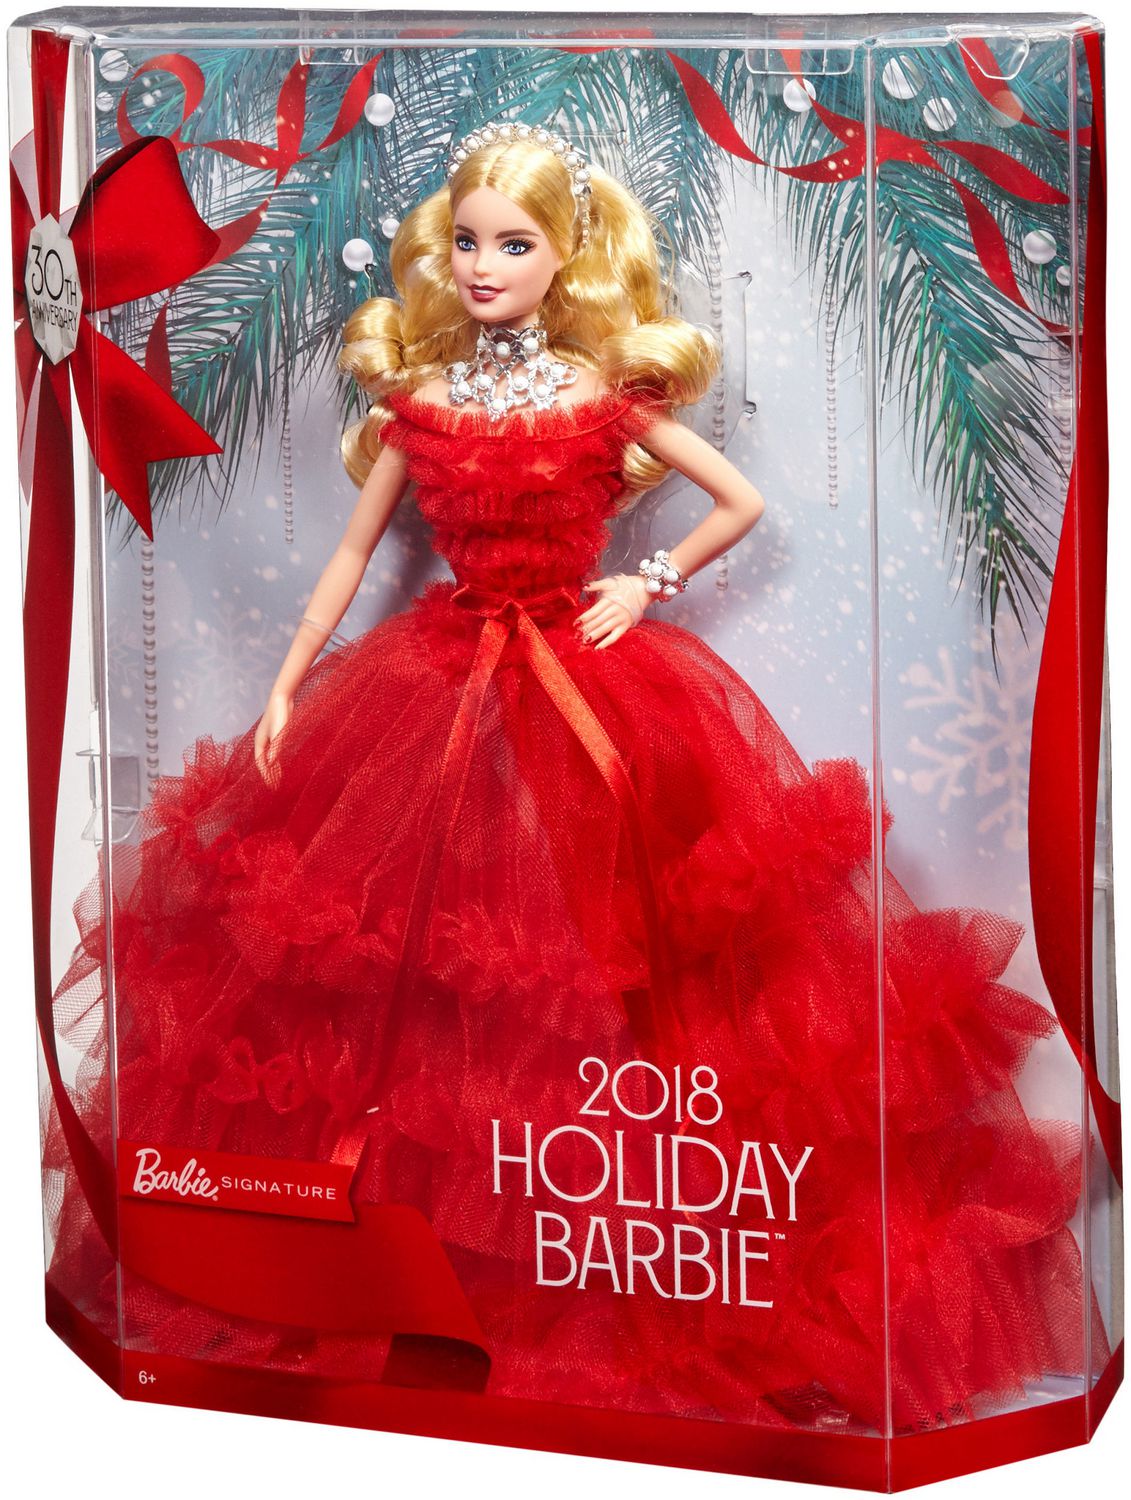 2018 holiday barbie blonde